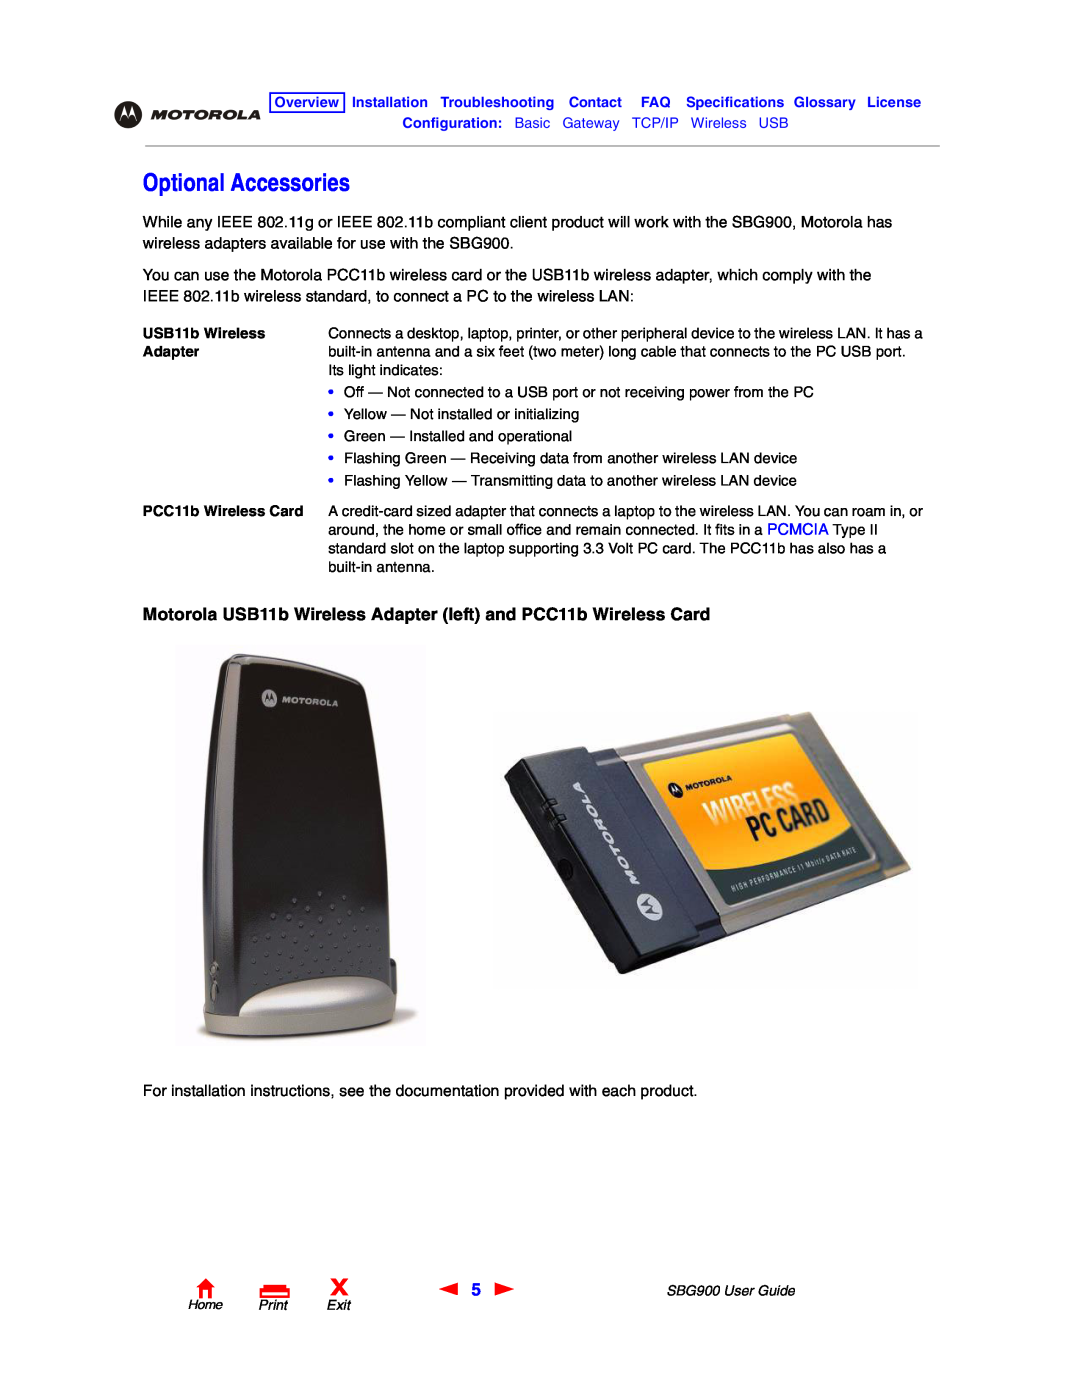 Motorola SBG900 manual Optional Accessories, Motorola USB11b Wireless Adapter left and PCC11b Wireless Card 